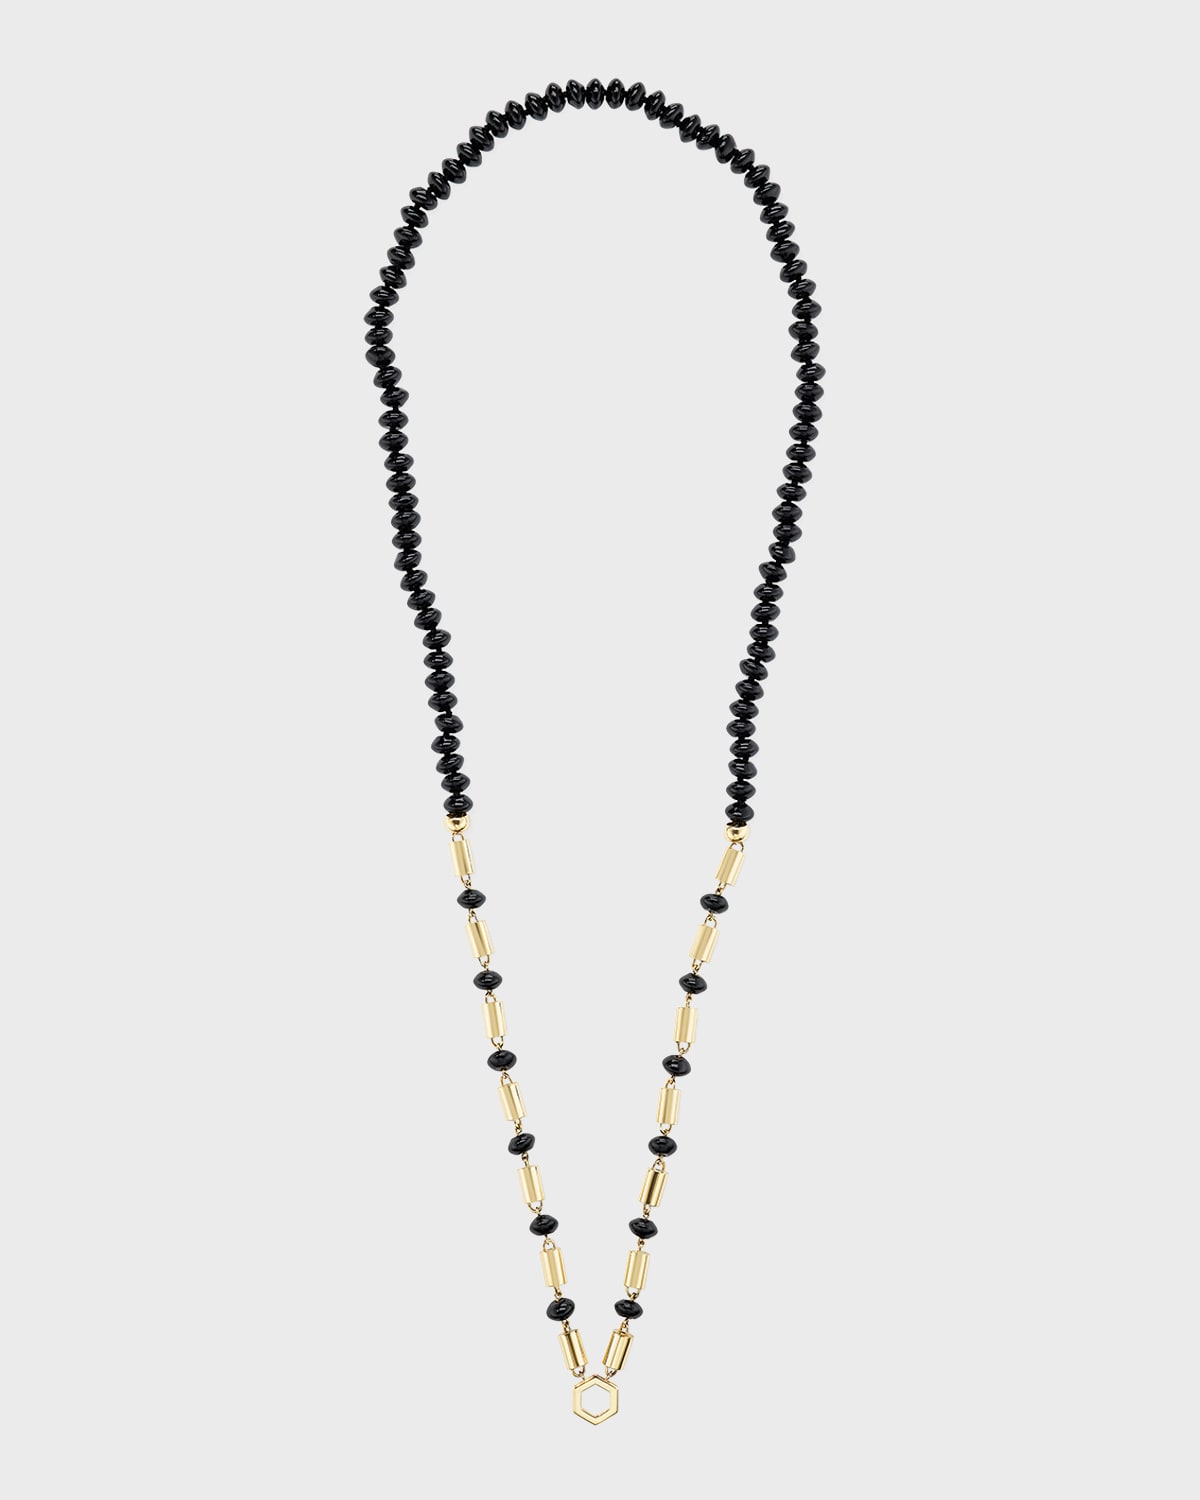 Harwell Godfrey Yellow Gold Black Onyx Necklace